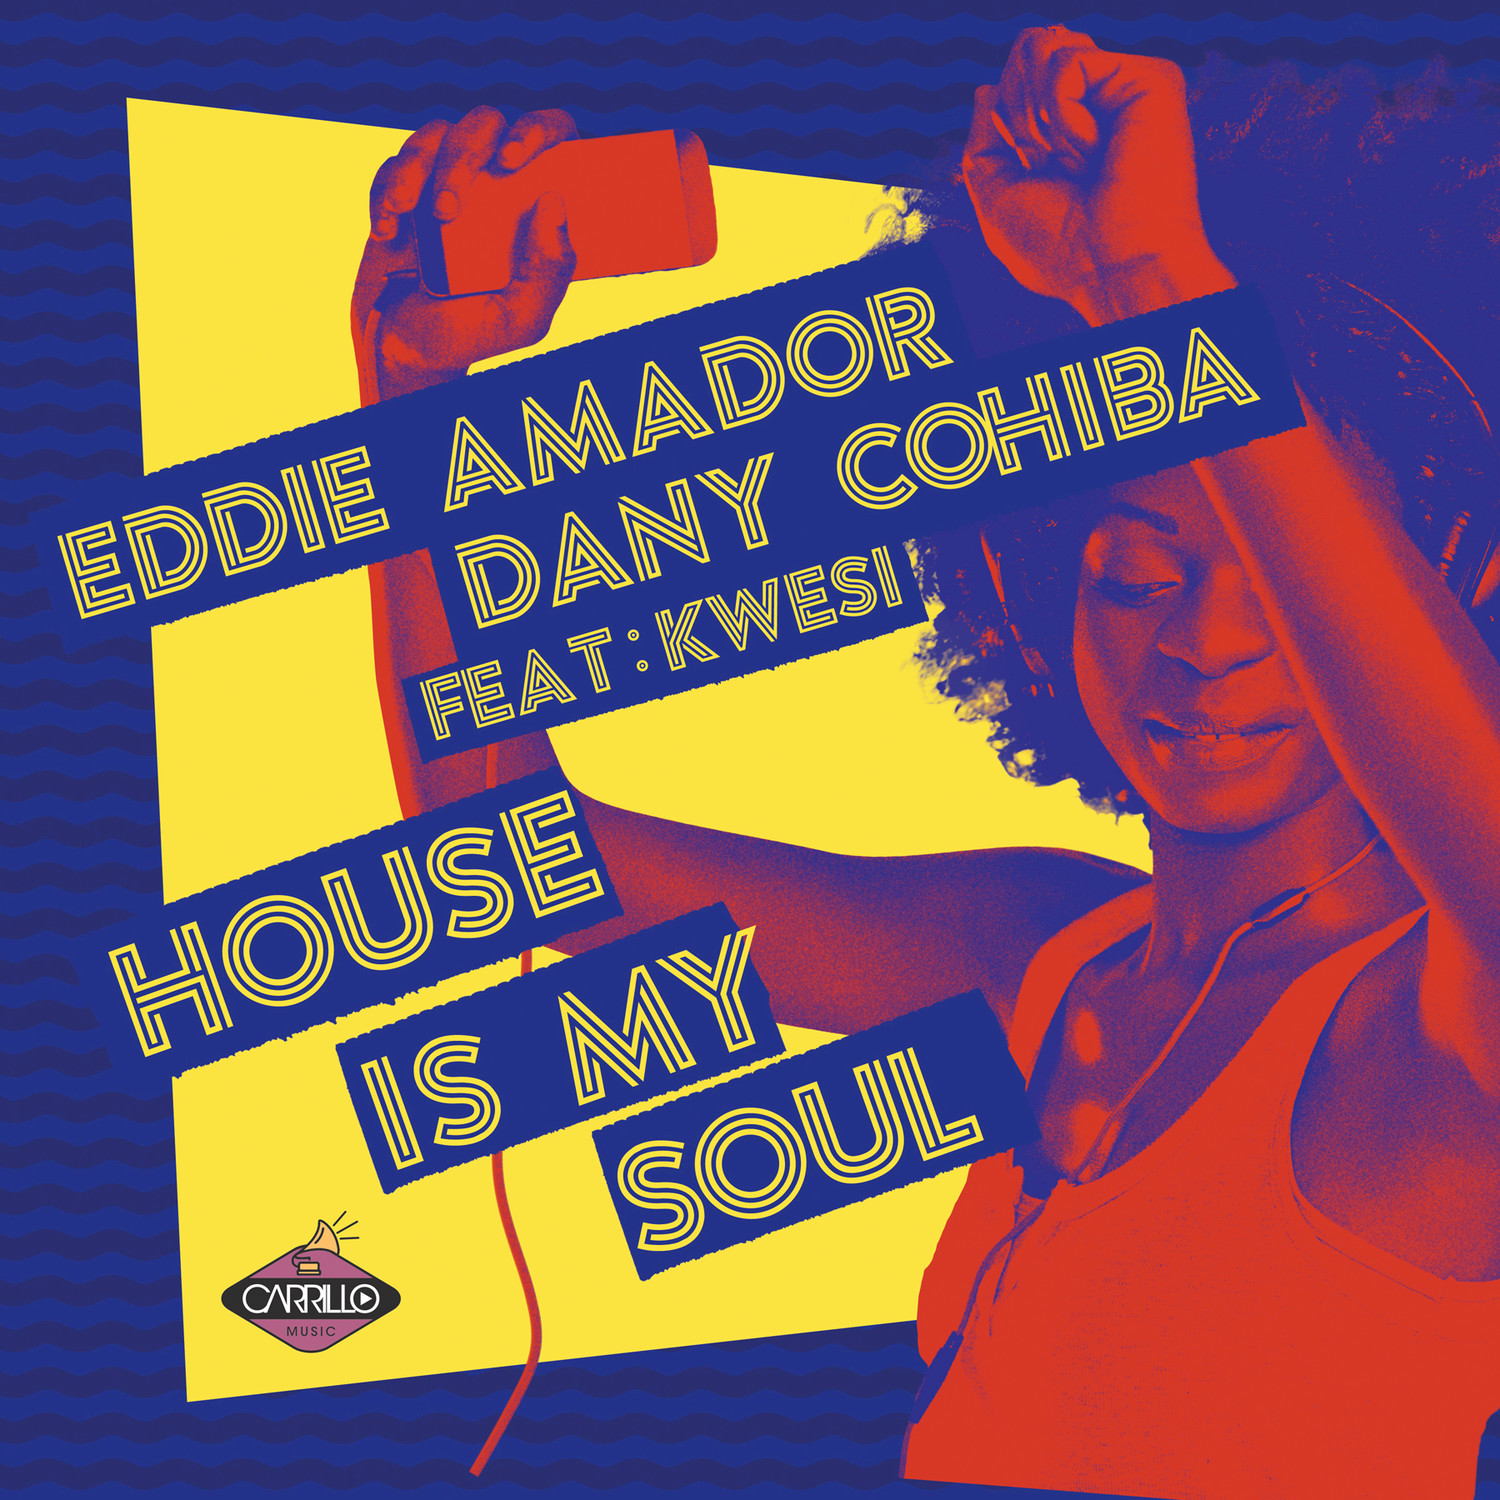 House Is My Soul (Big Chief C Club Mix)